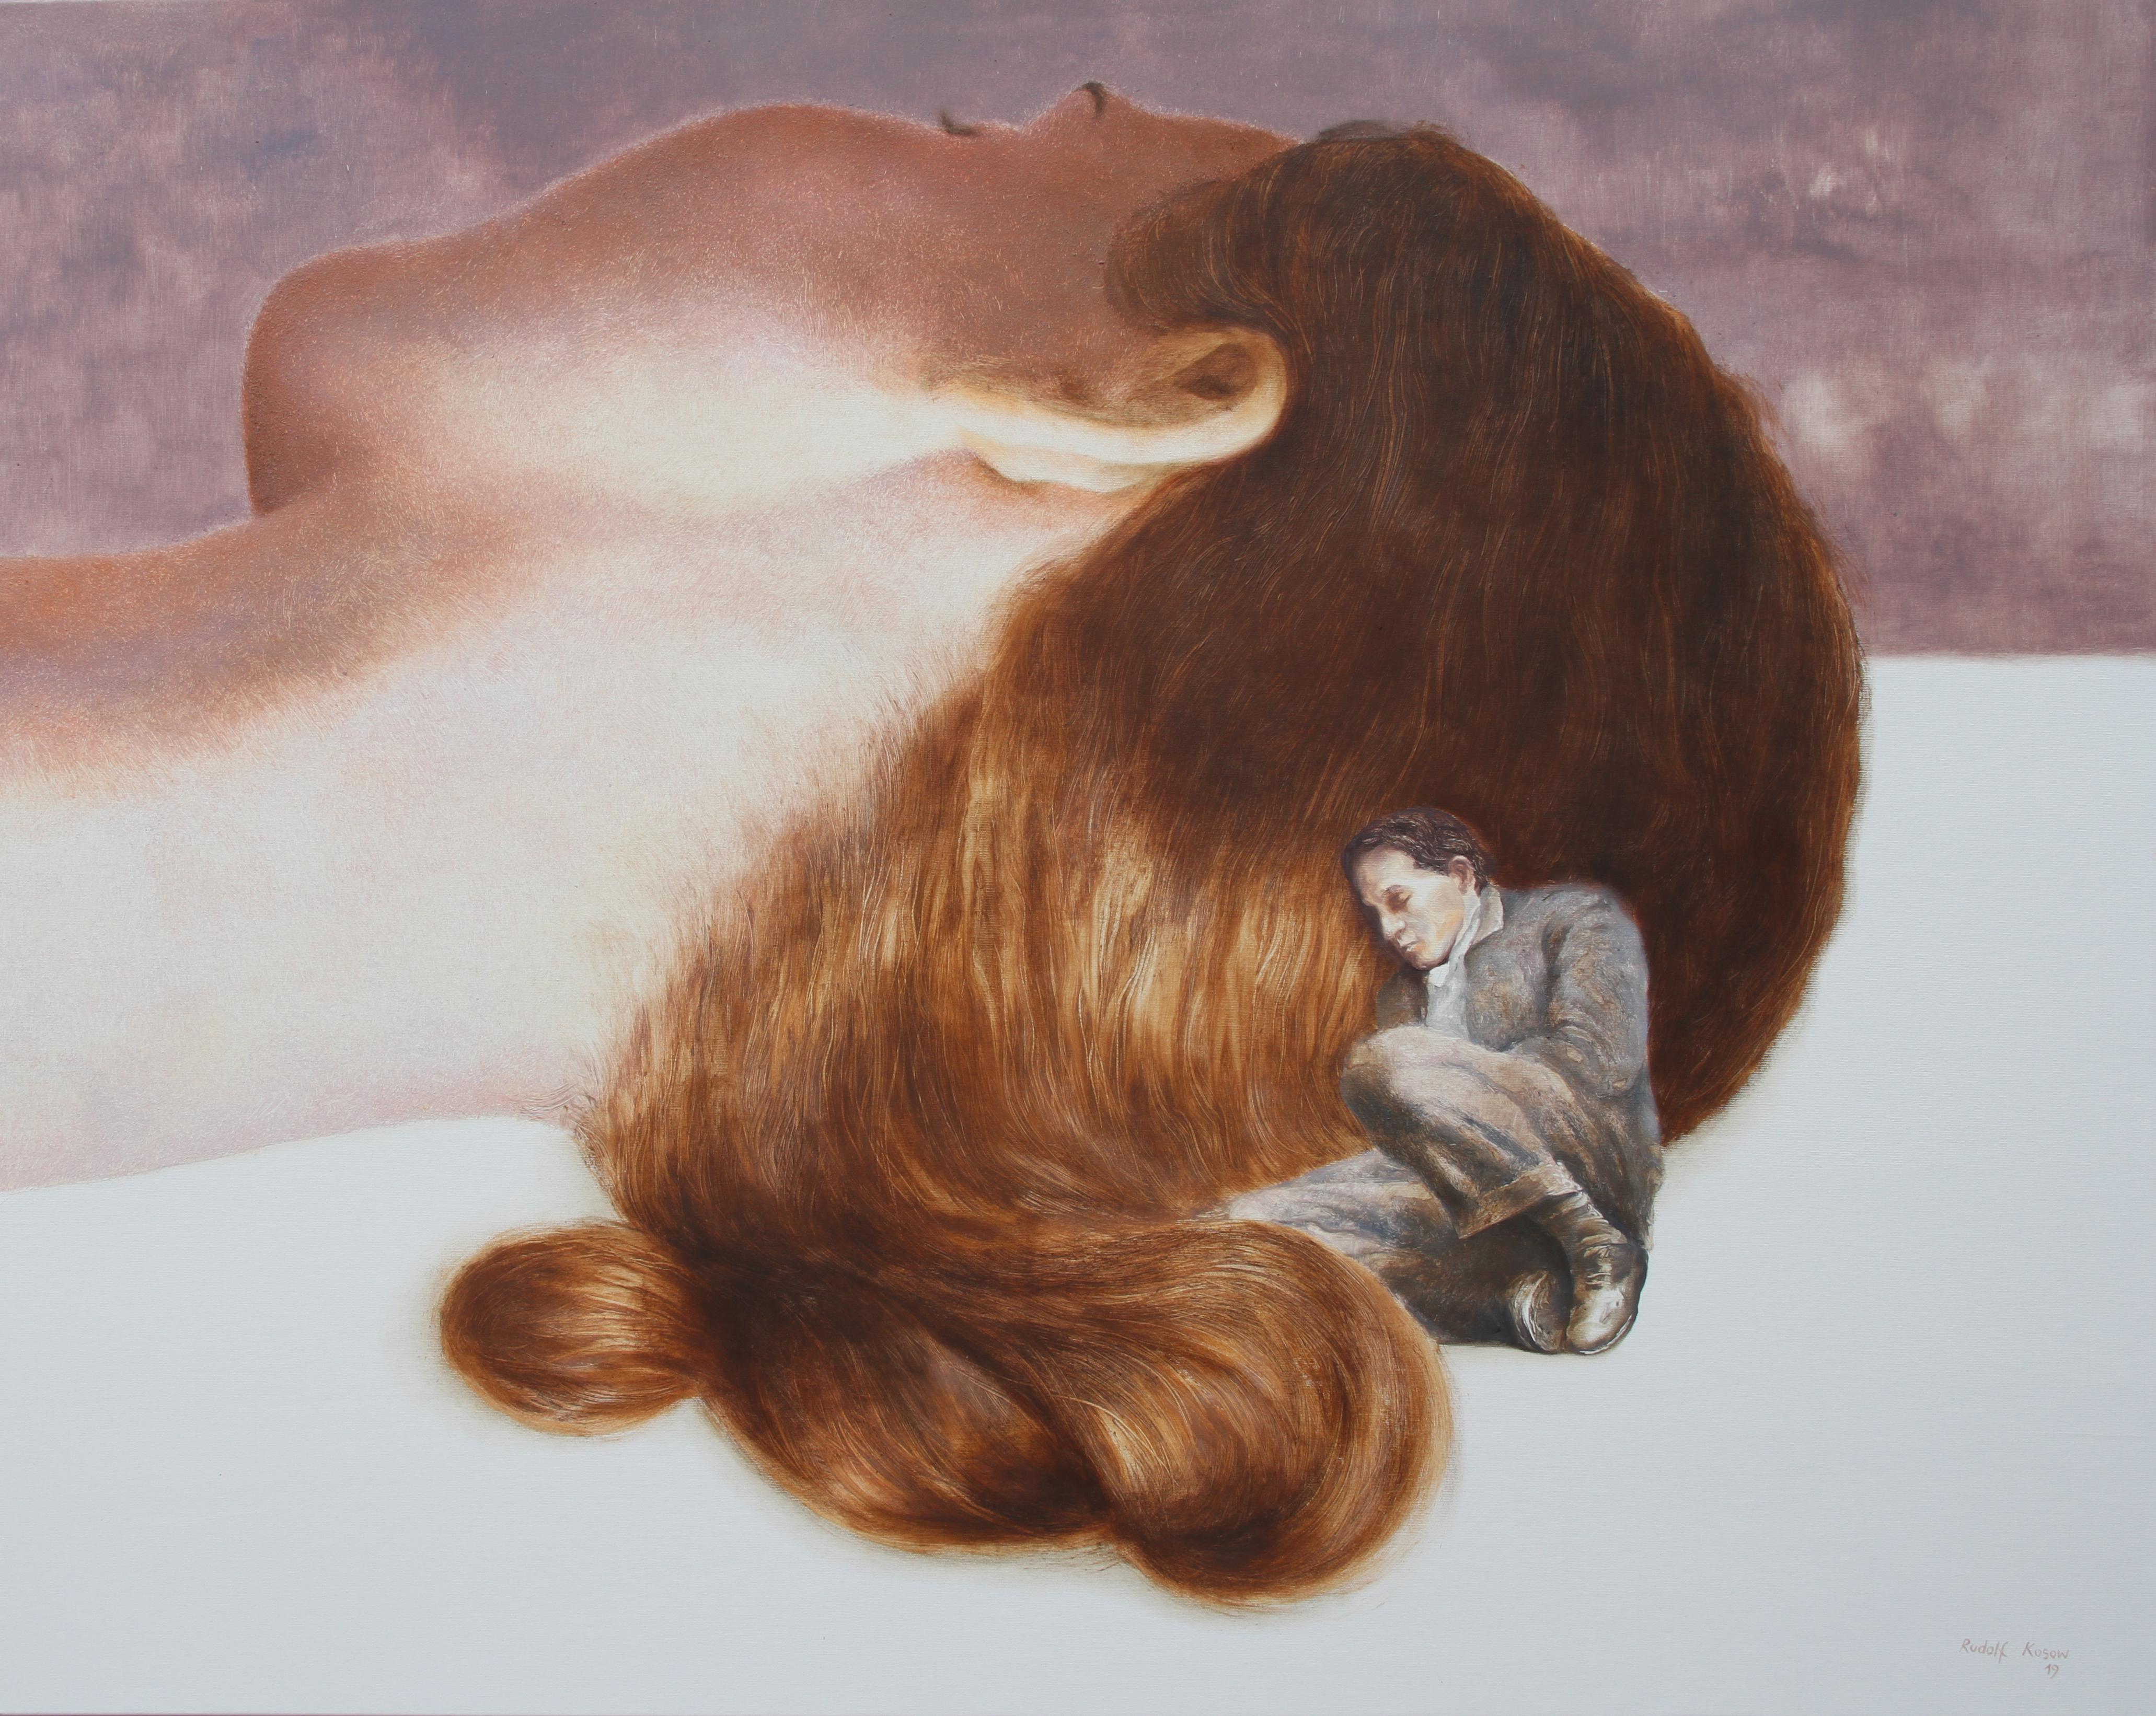 Together (oil painting vintage couple figurative nostalgia sleeping beauty flesh